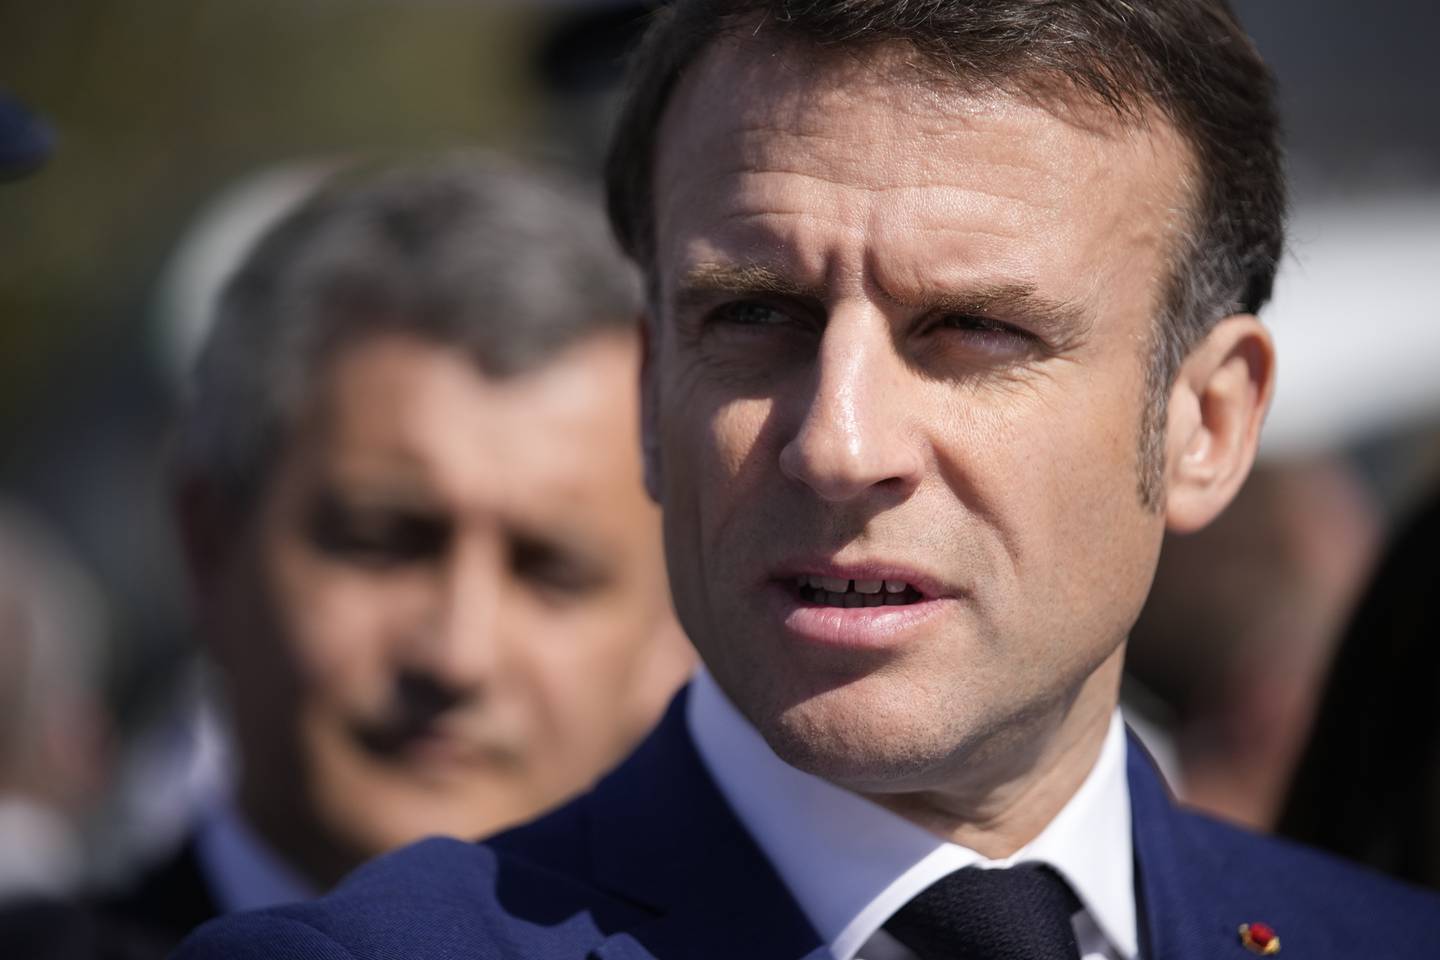 Macron gikk på et sviende nederlag i saken, og regjeringen varsler at siste ord ikke er sagt. Foto: Christophe Ena / AP / NTB